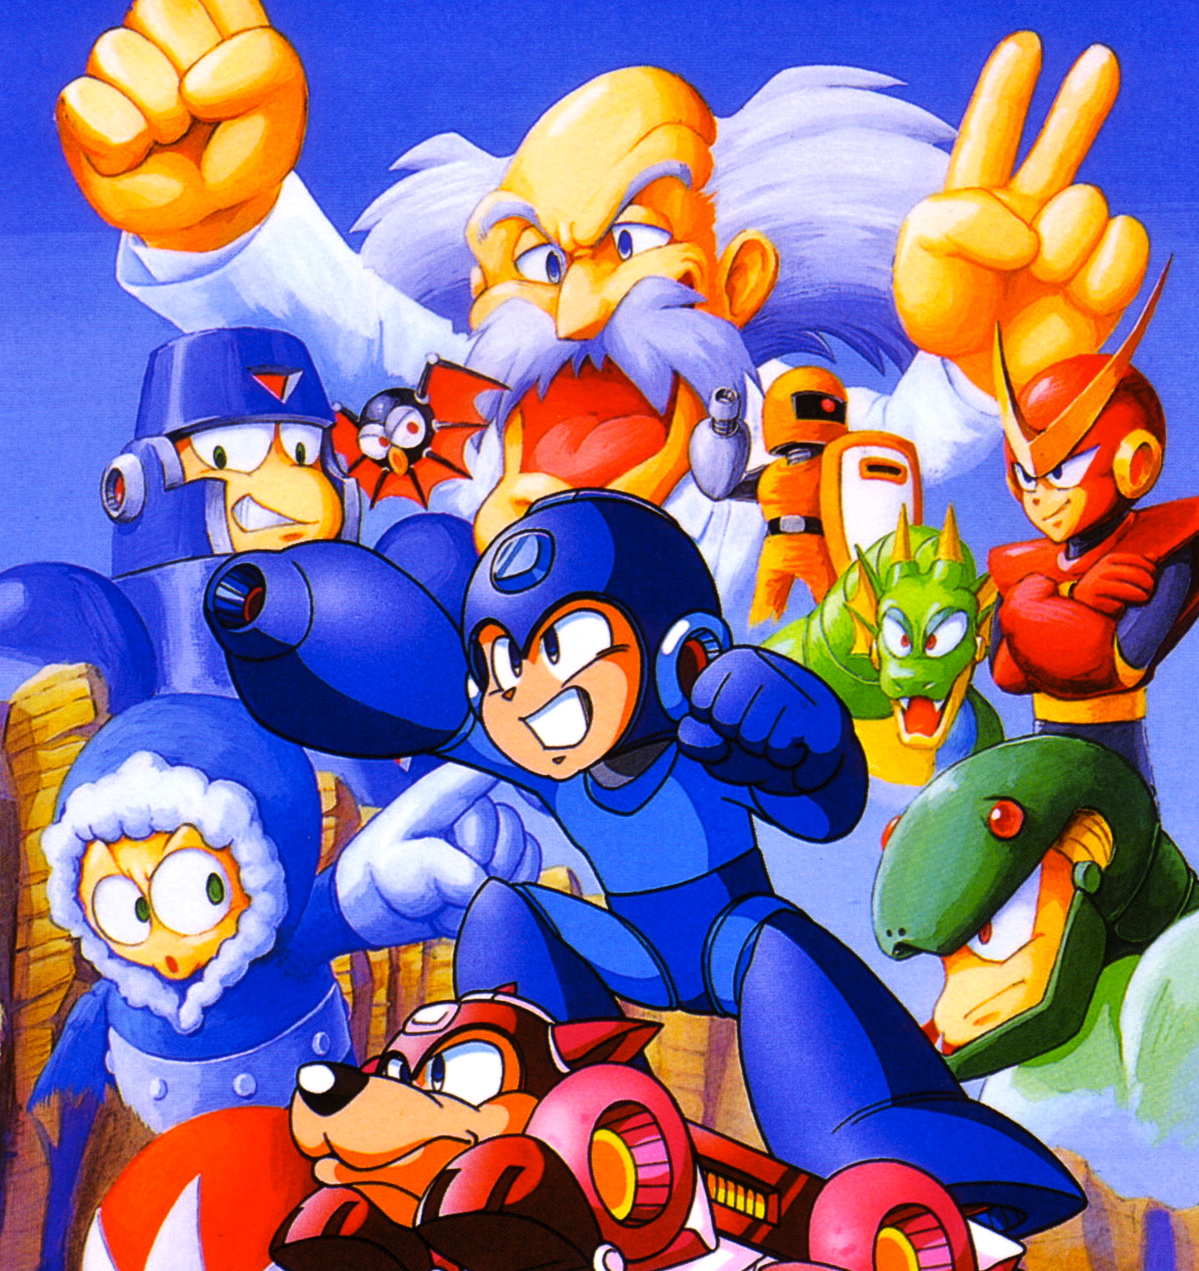 Yes, Mega Man: The Wily Wars is still coming preloaded on SEGA's. 